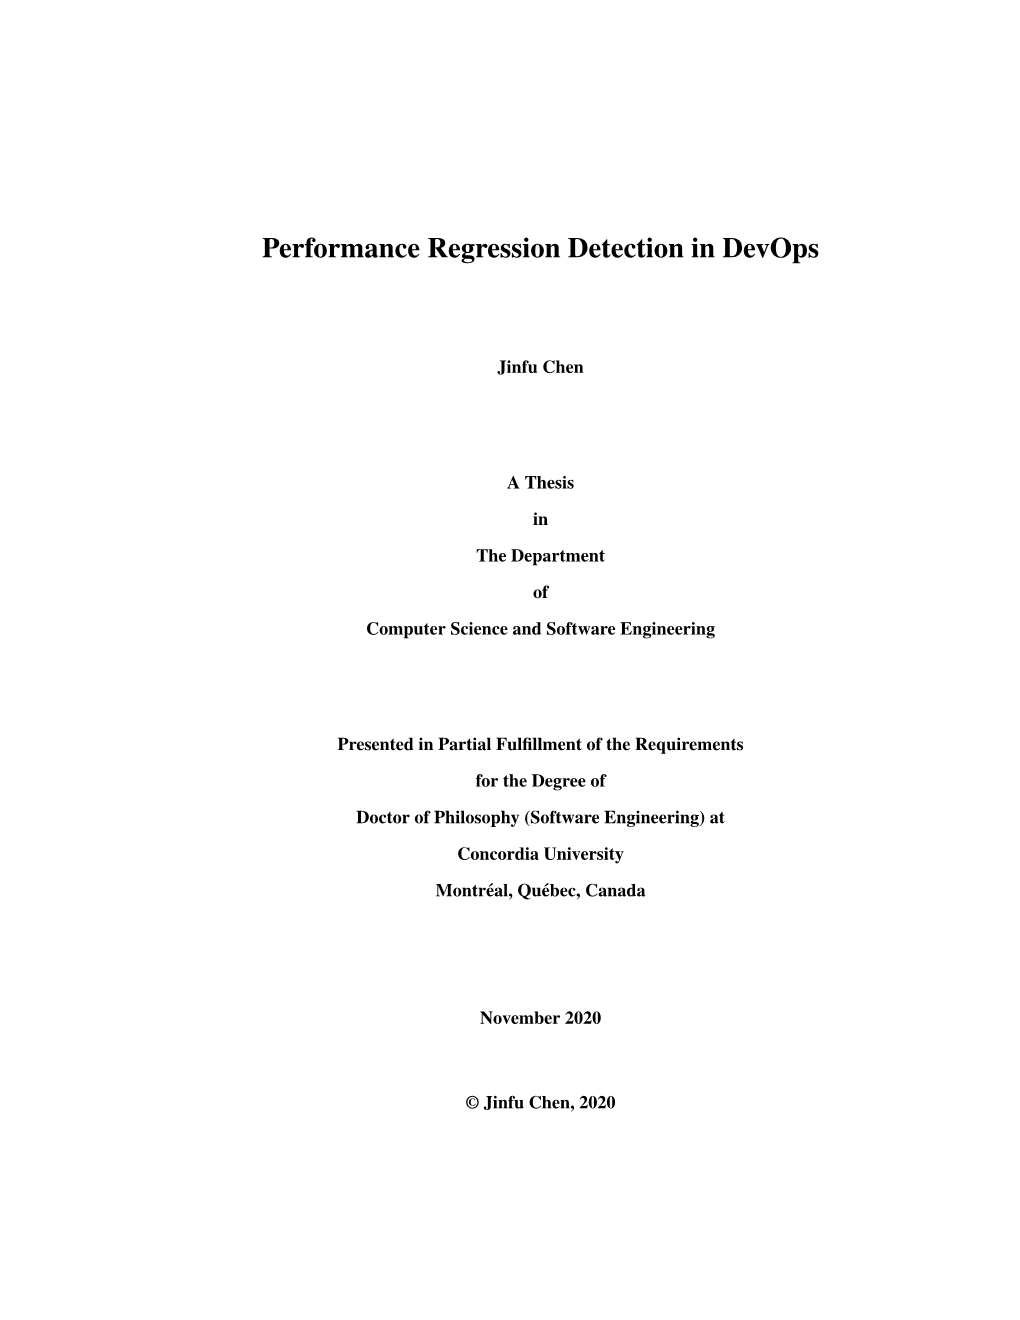 Performance Regression Detection in Devops